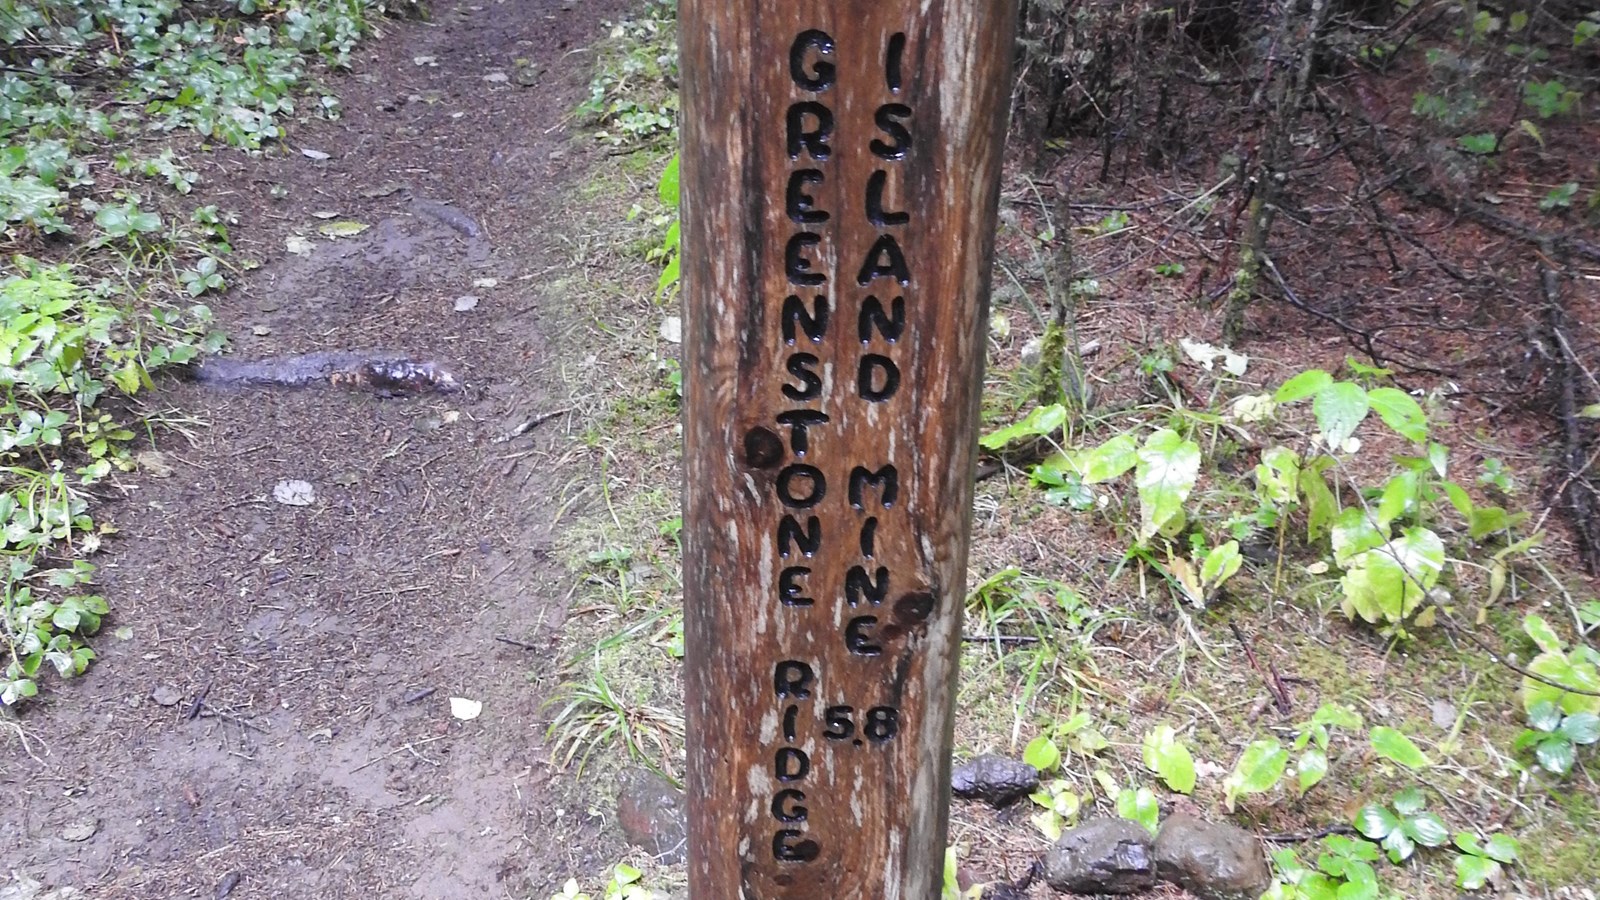 Wooden trail Marker for Greenstone Ridge Trail